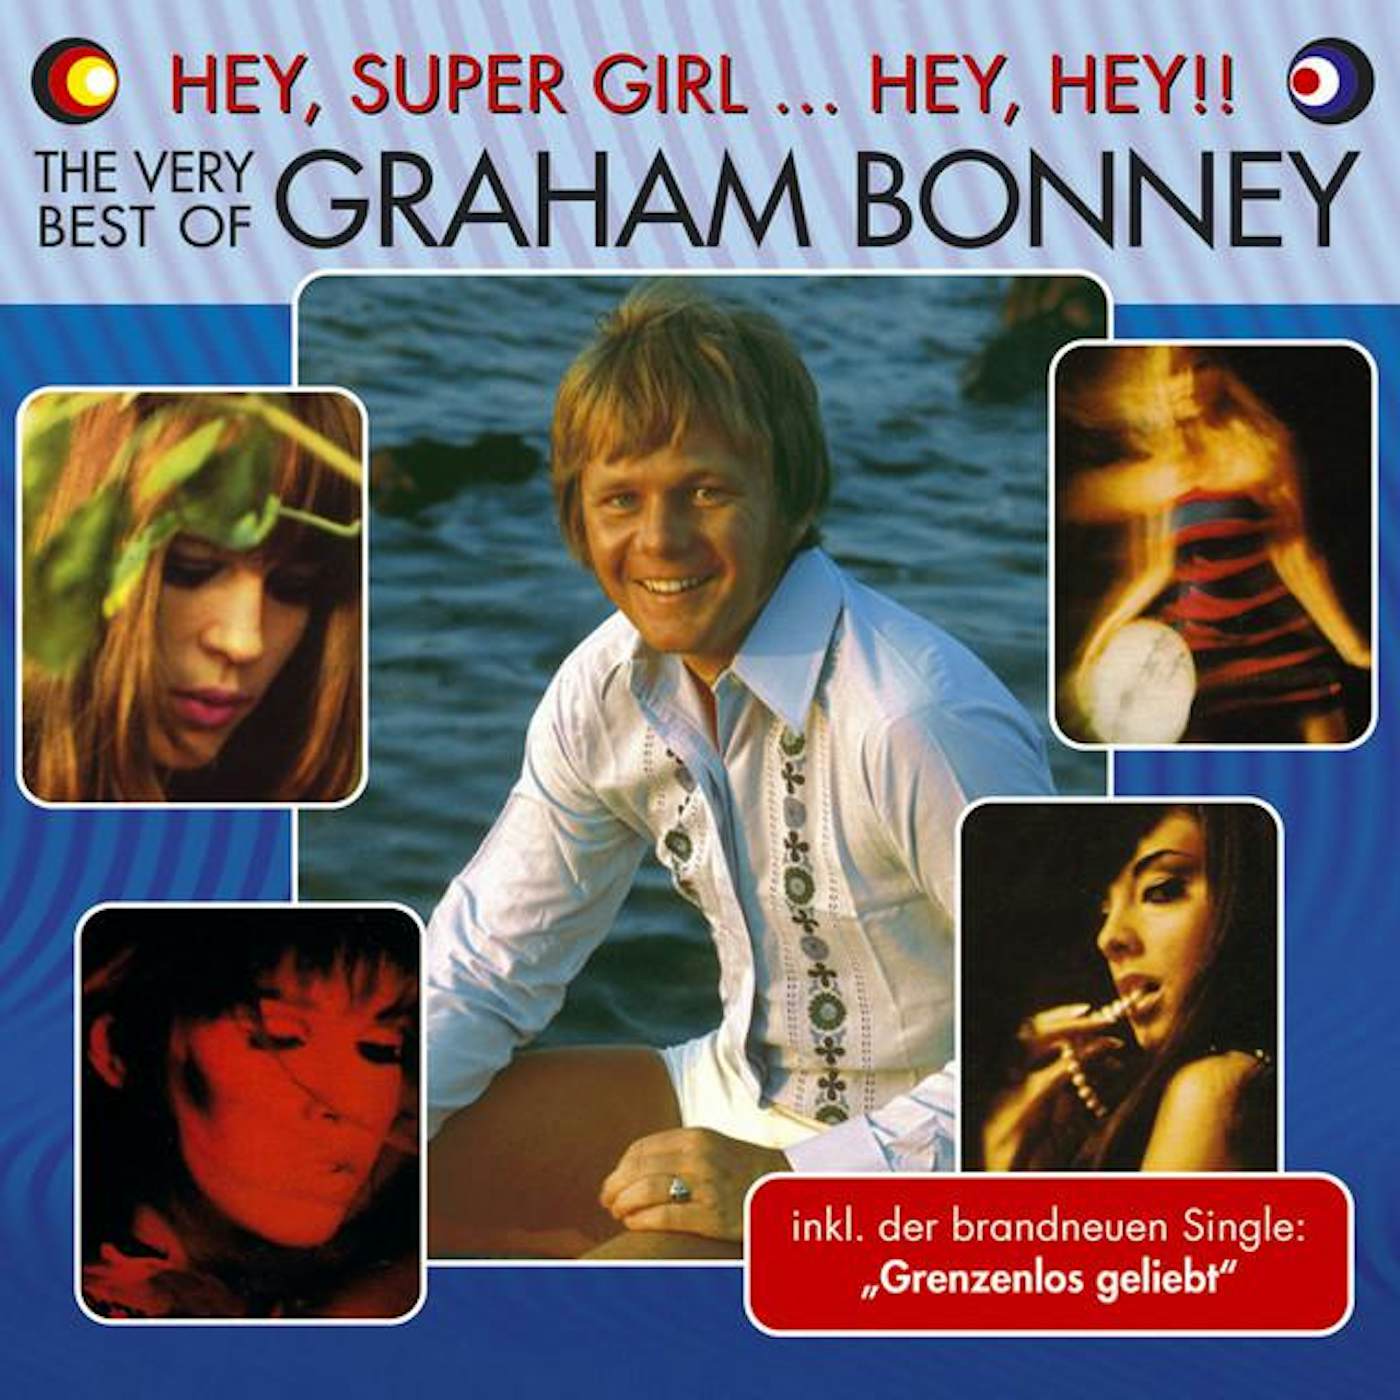 Graham Bonney